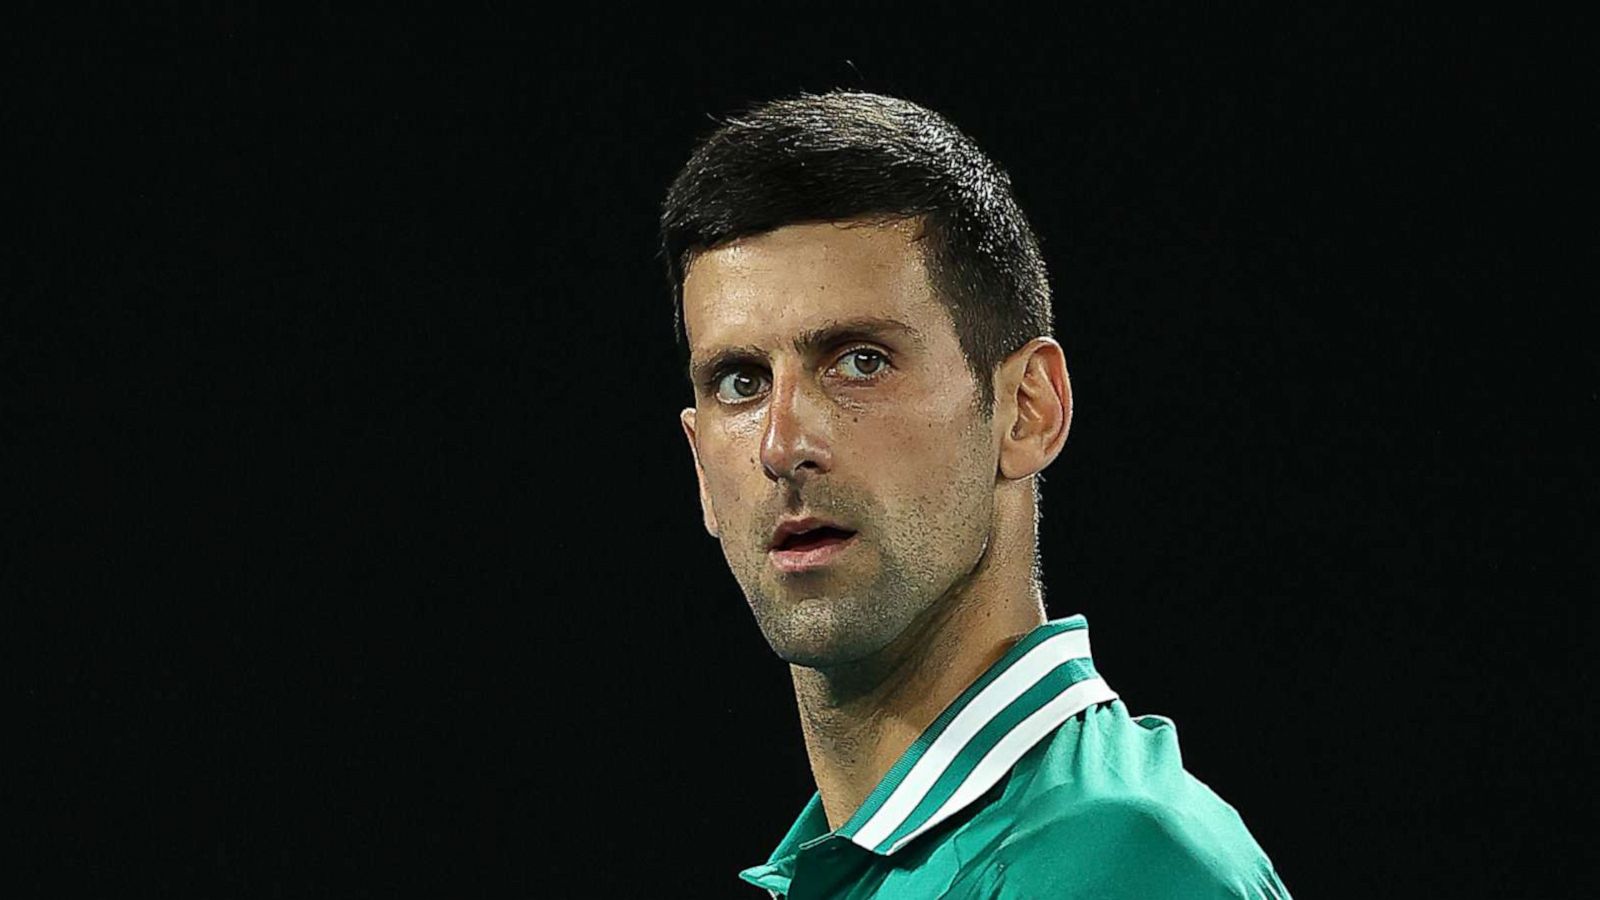 Djokovic thanks fans as he awaits court decision on Australian visa